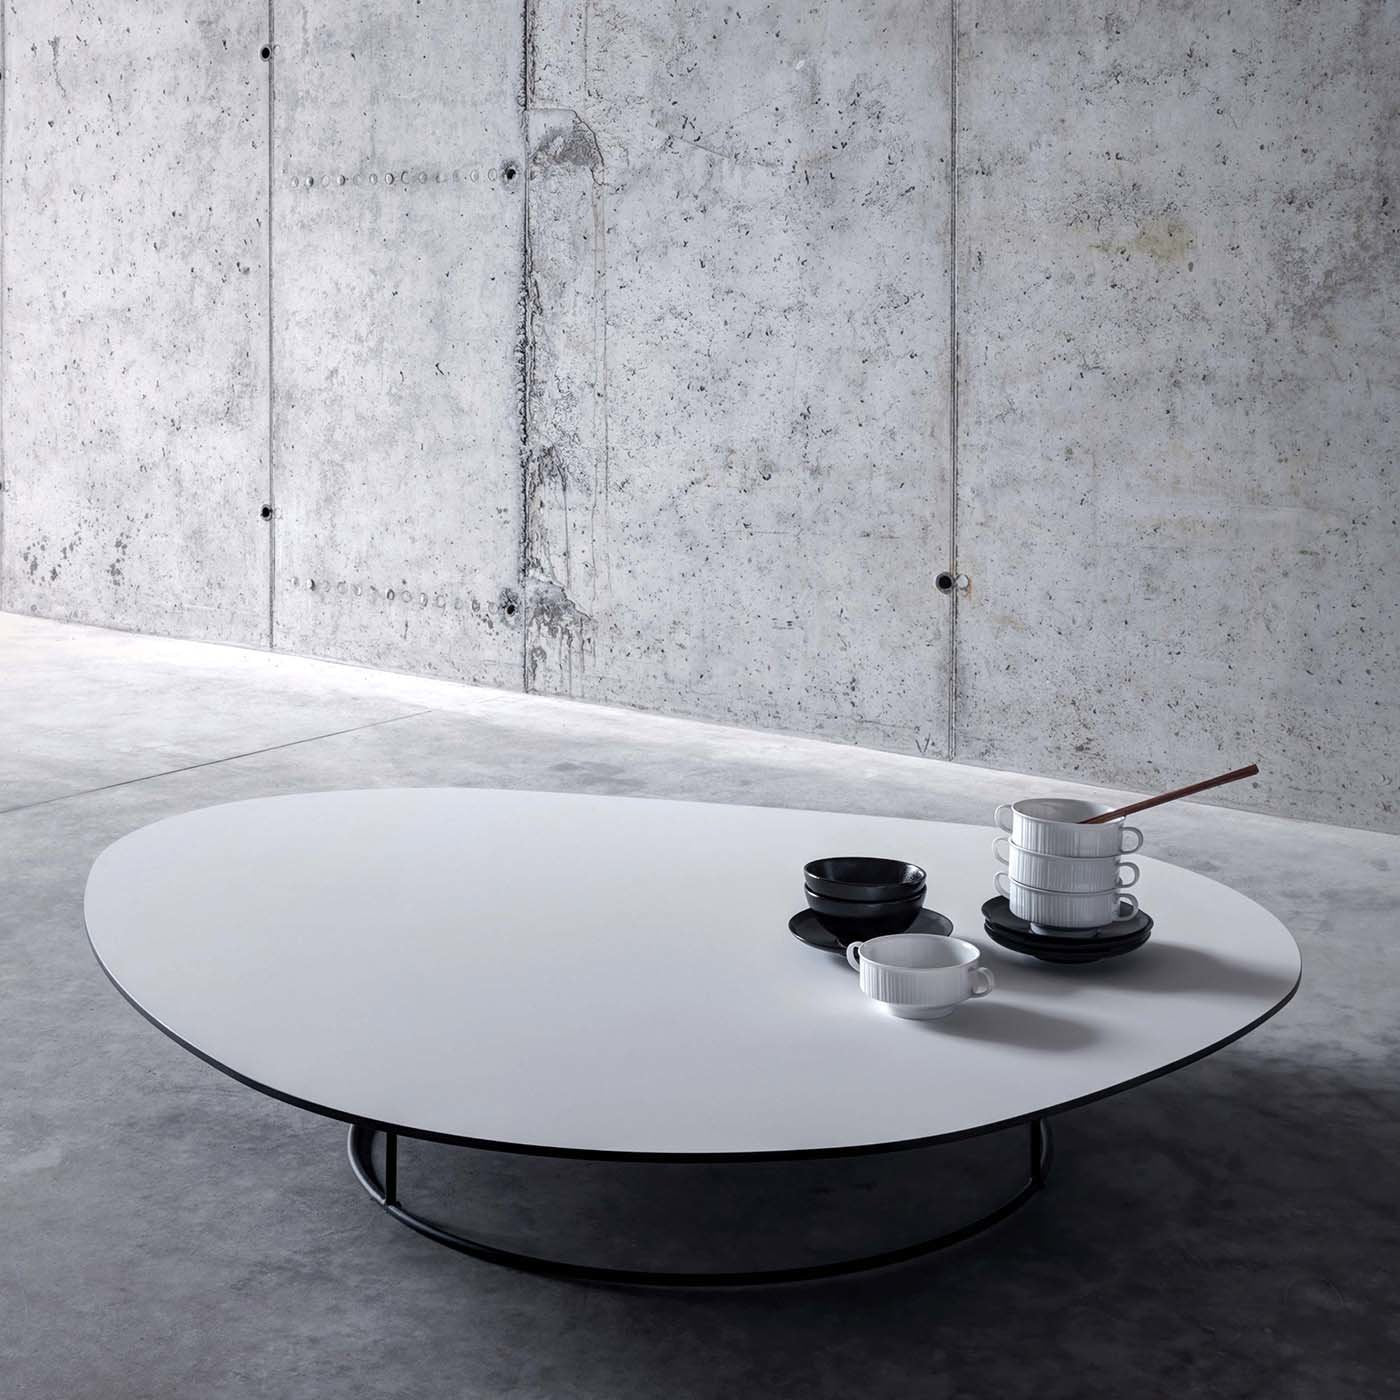 Soglino Coffee Table by Act_Romegialli - Alternative view 2